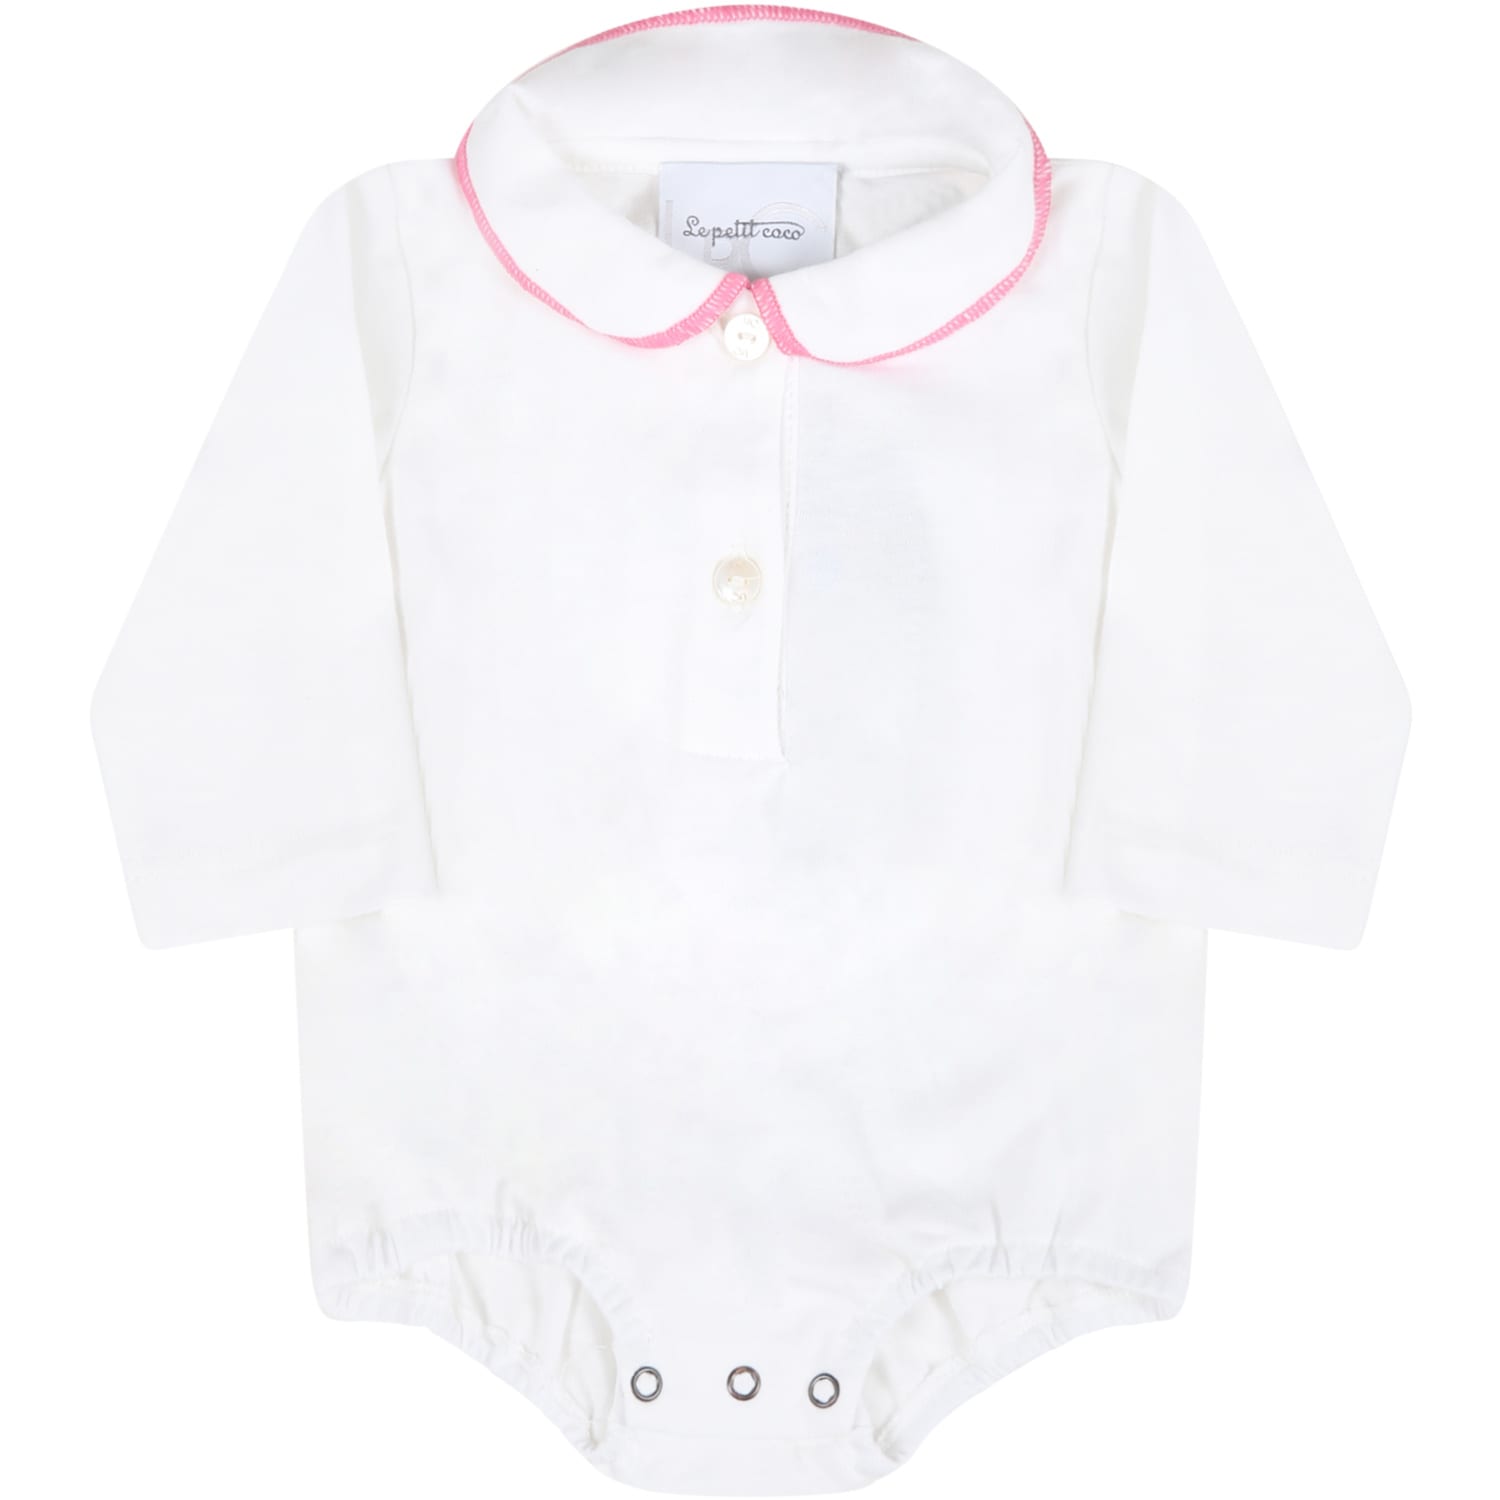 Le Petit Coco White Bodysuit For Babykids